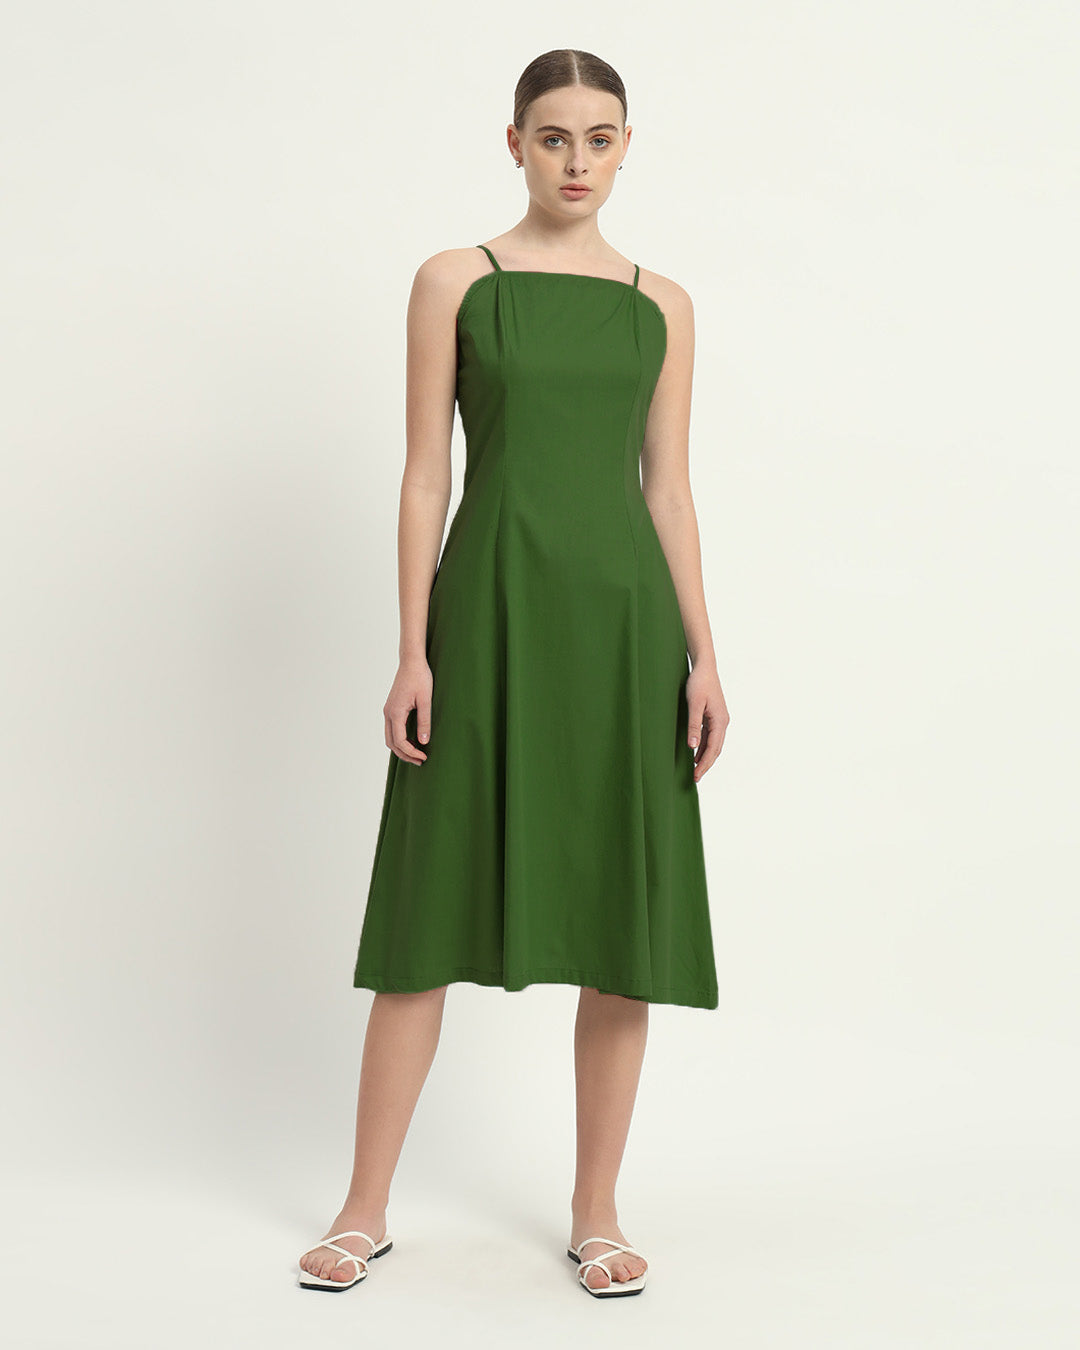 The Valatie Emerald Cotton Dress